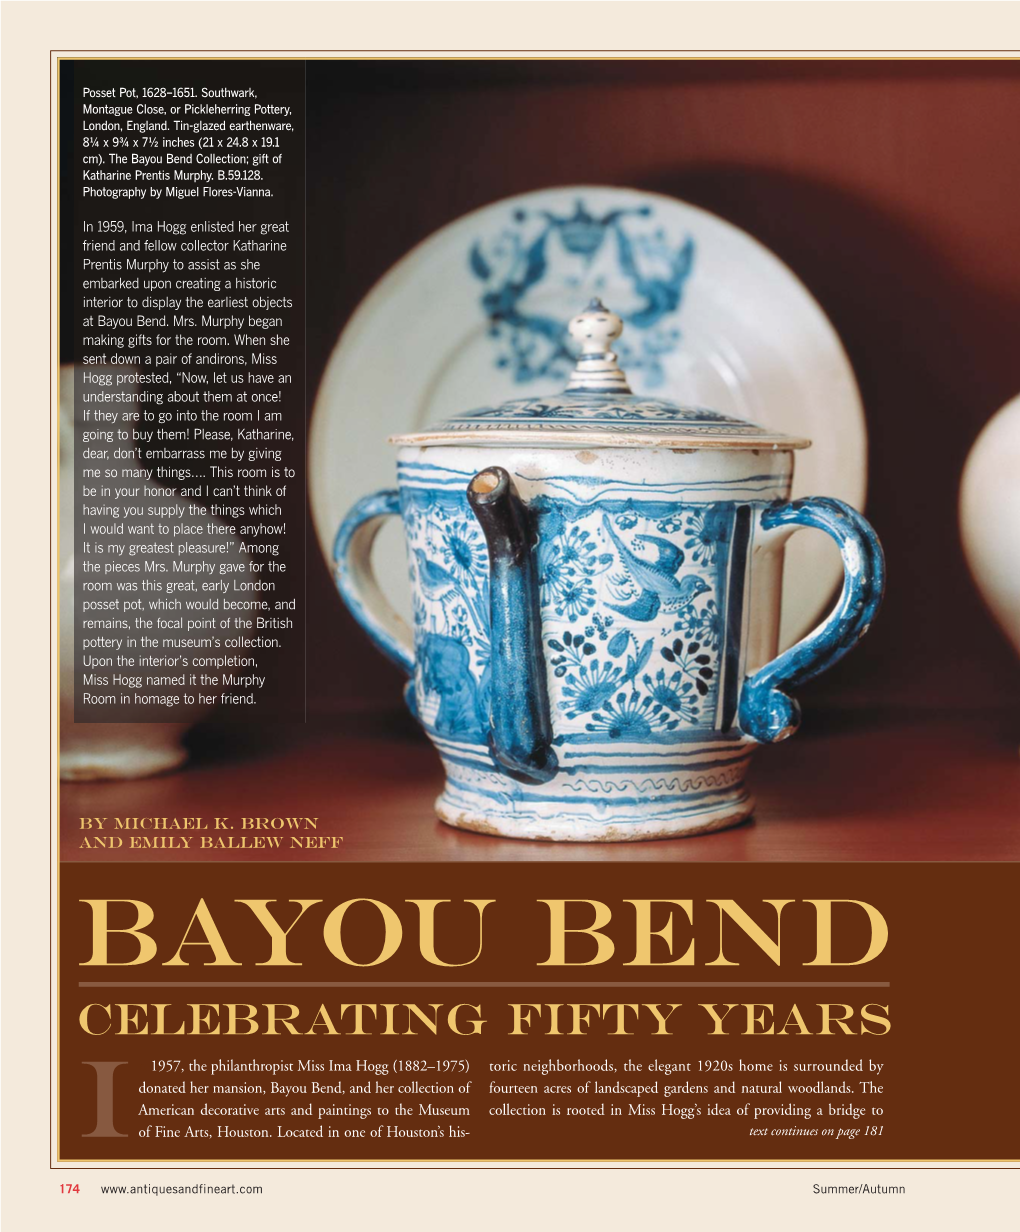 Bayou Bend Collection; Gift of Katharine Prentis Murphy